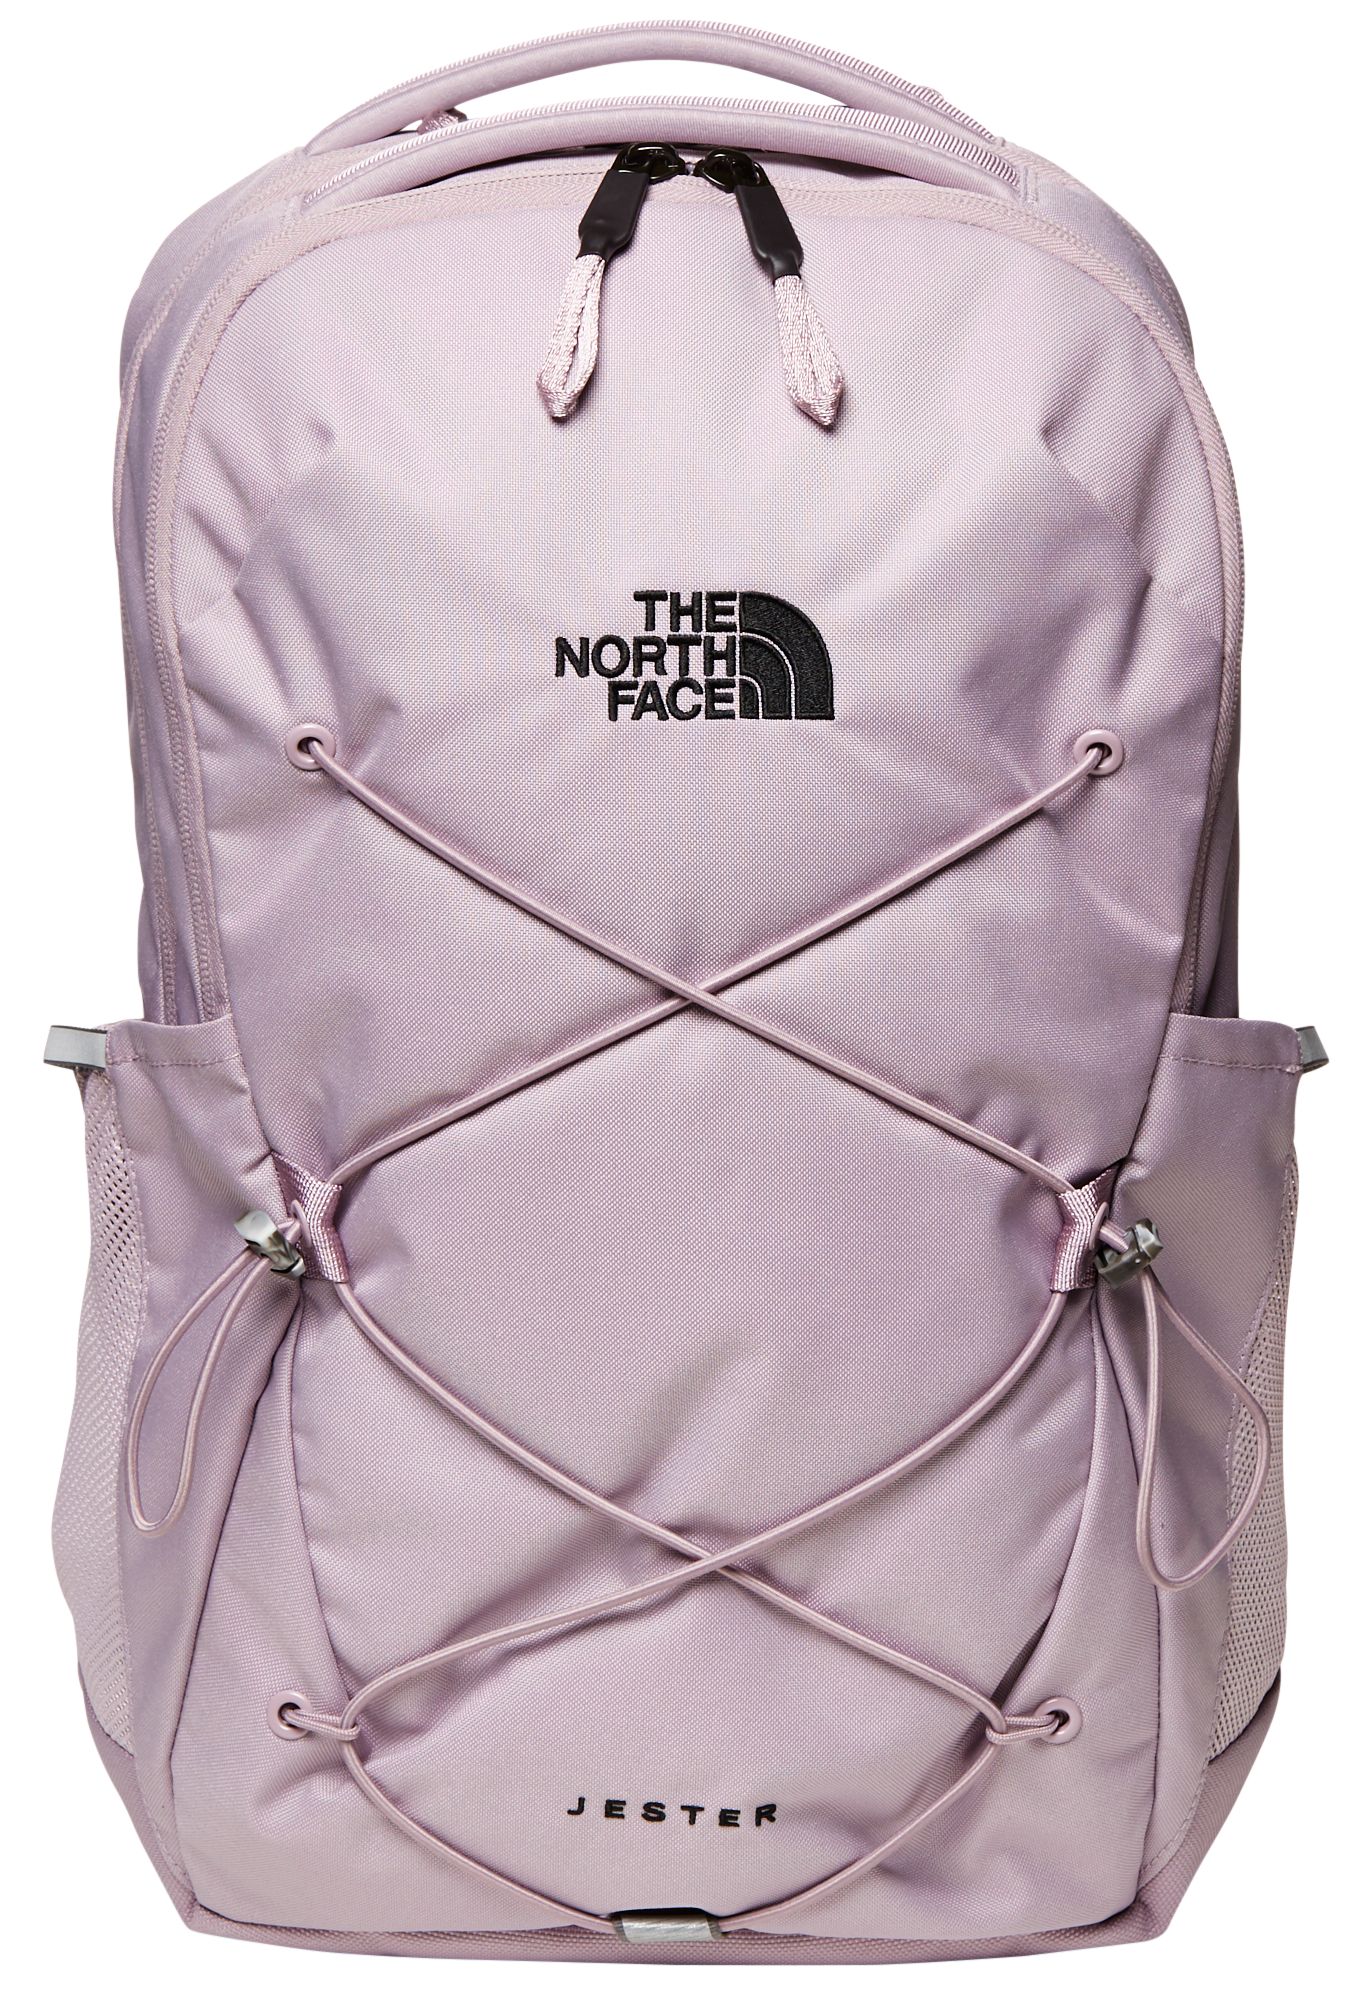 north pole backpacks